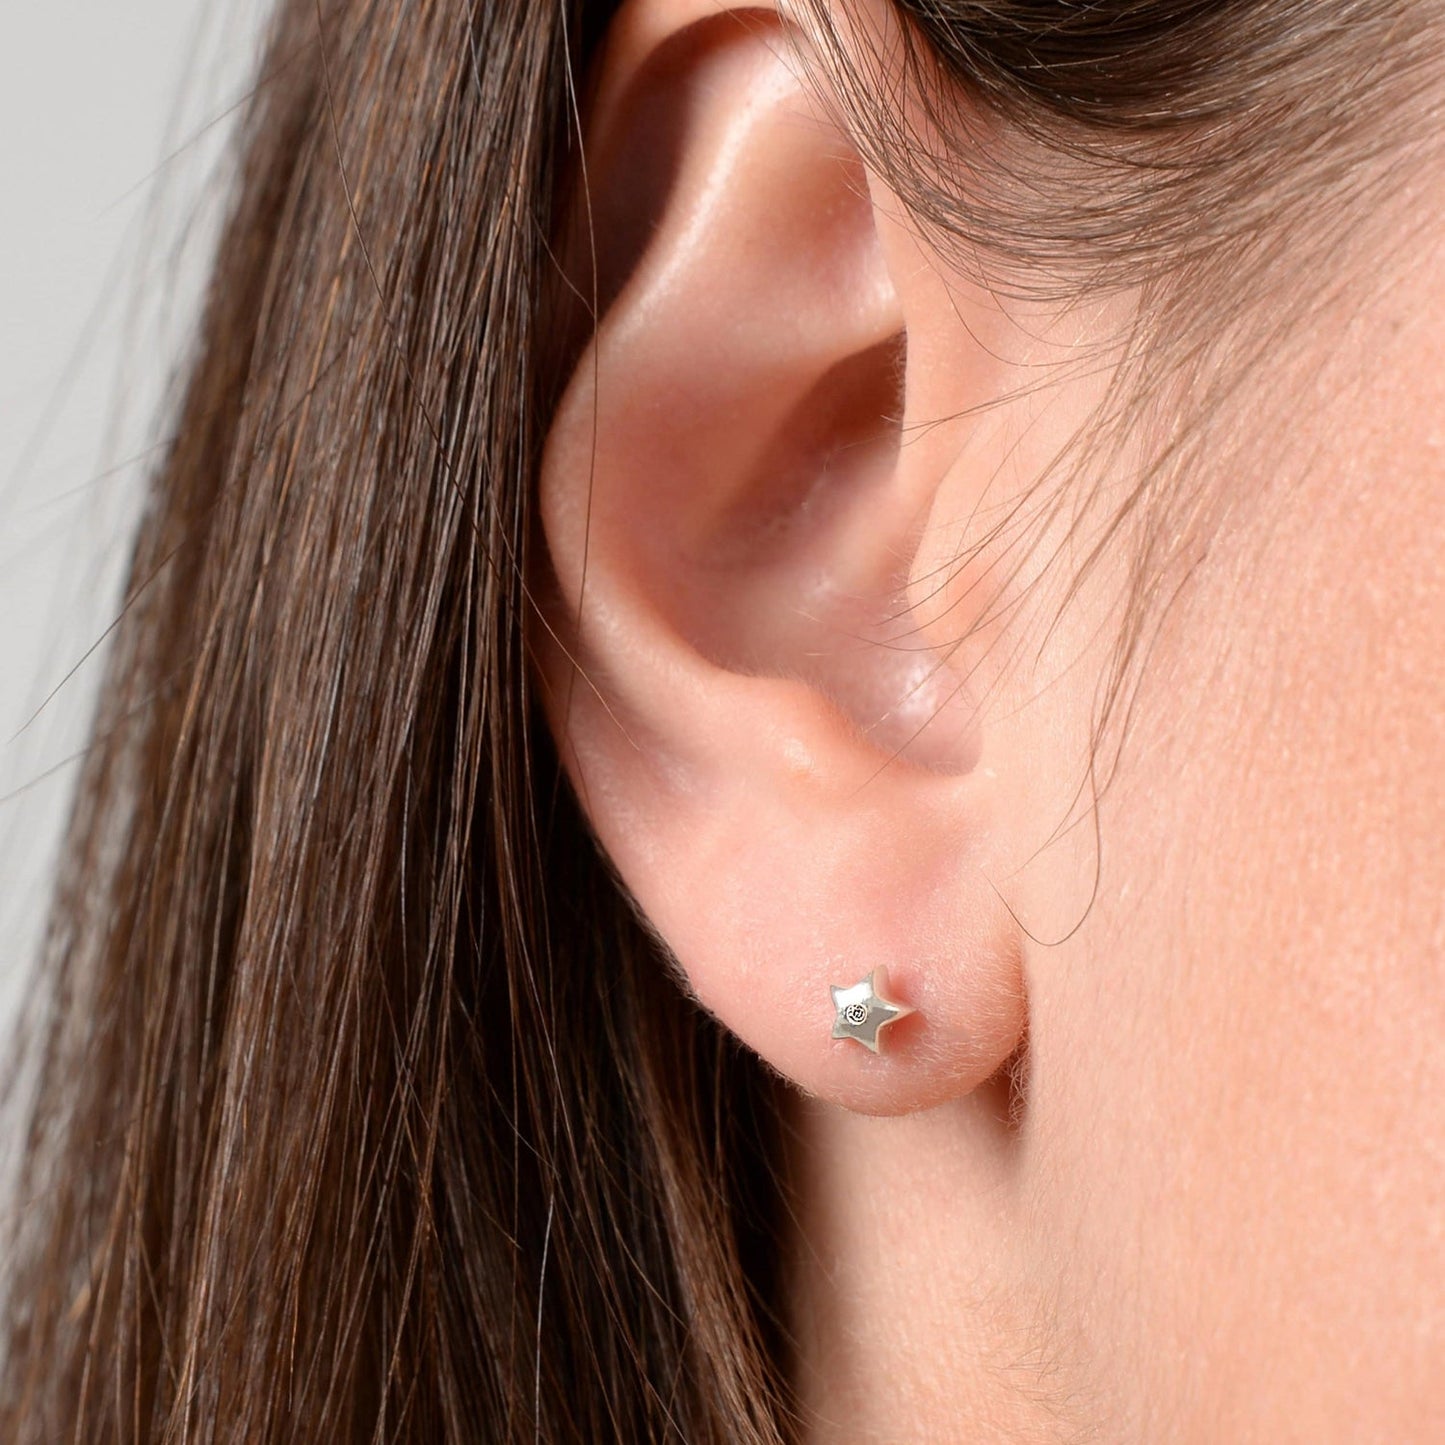 Tiny Star Earrings / Diamond Star Stud Earrings / Dainty Star Earrings / Tiny Stud Earrings / Small Stud Earrings / Minimalist Earrings